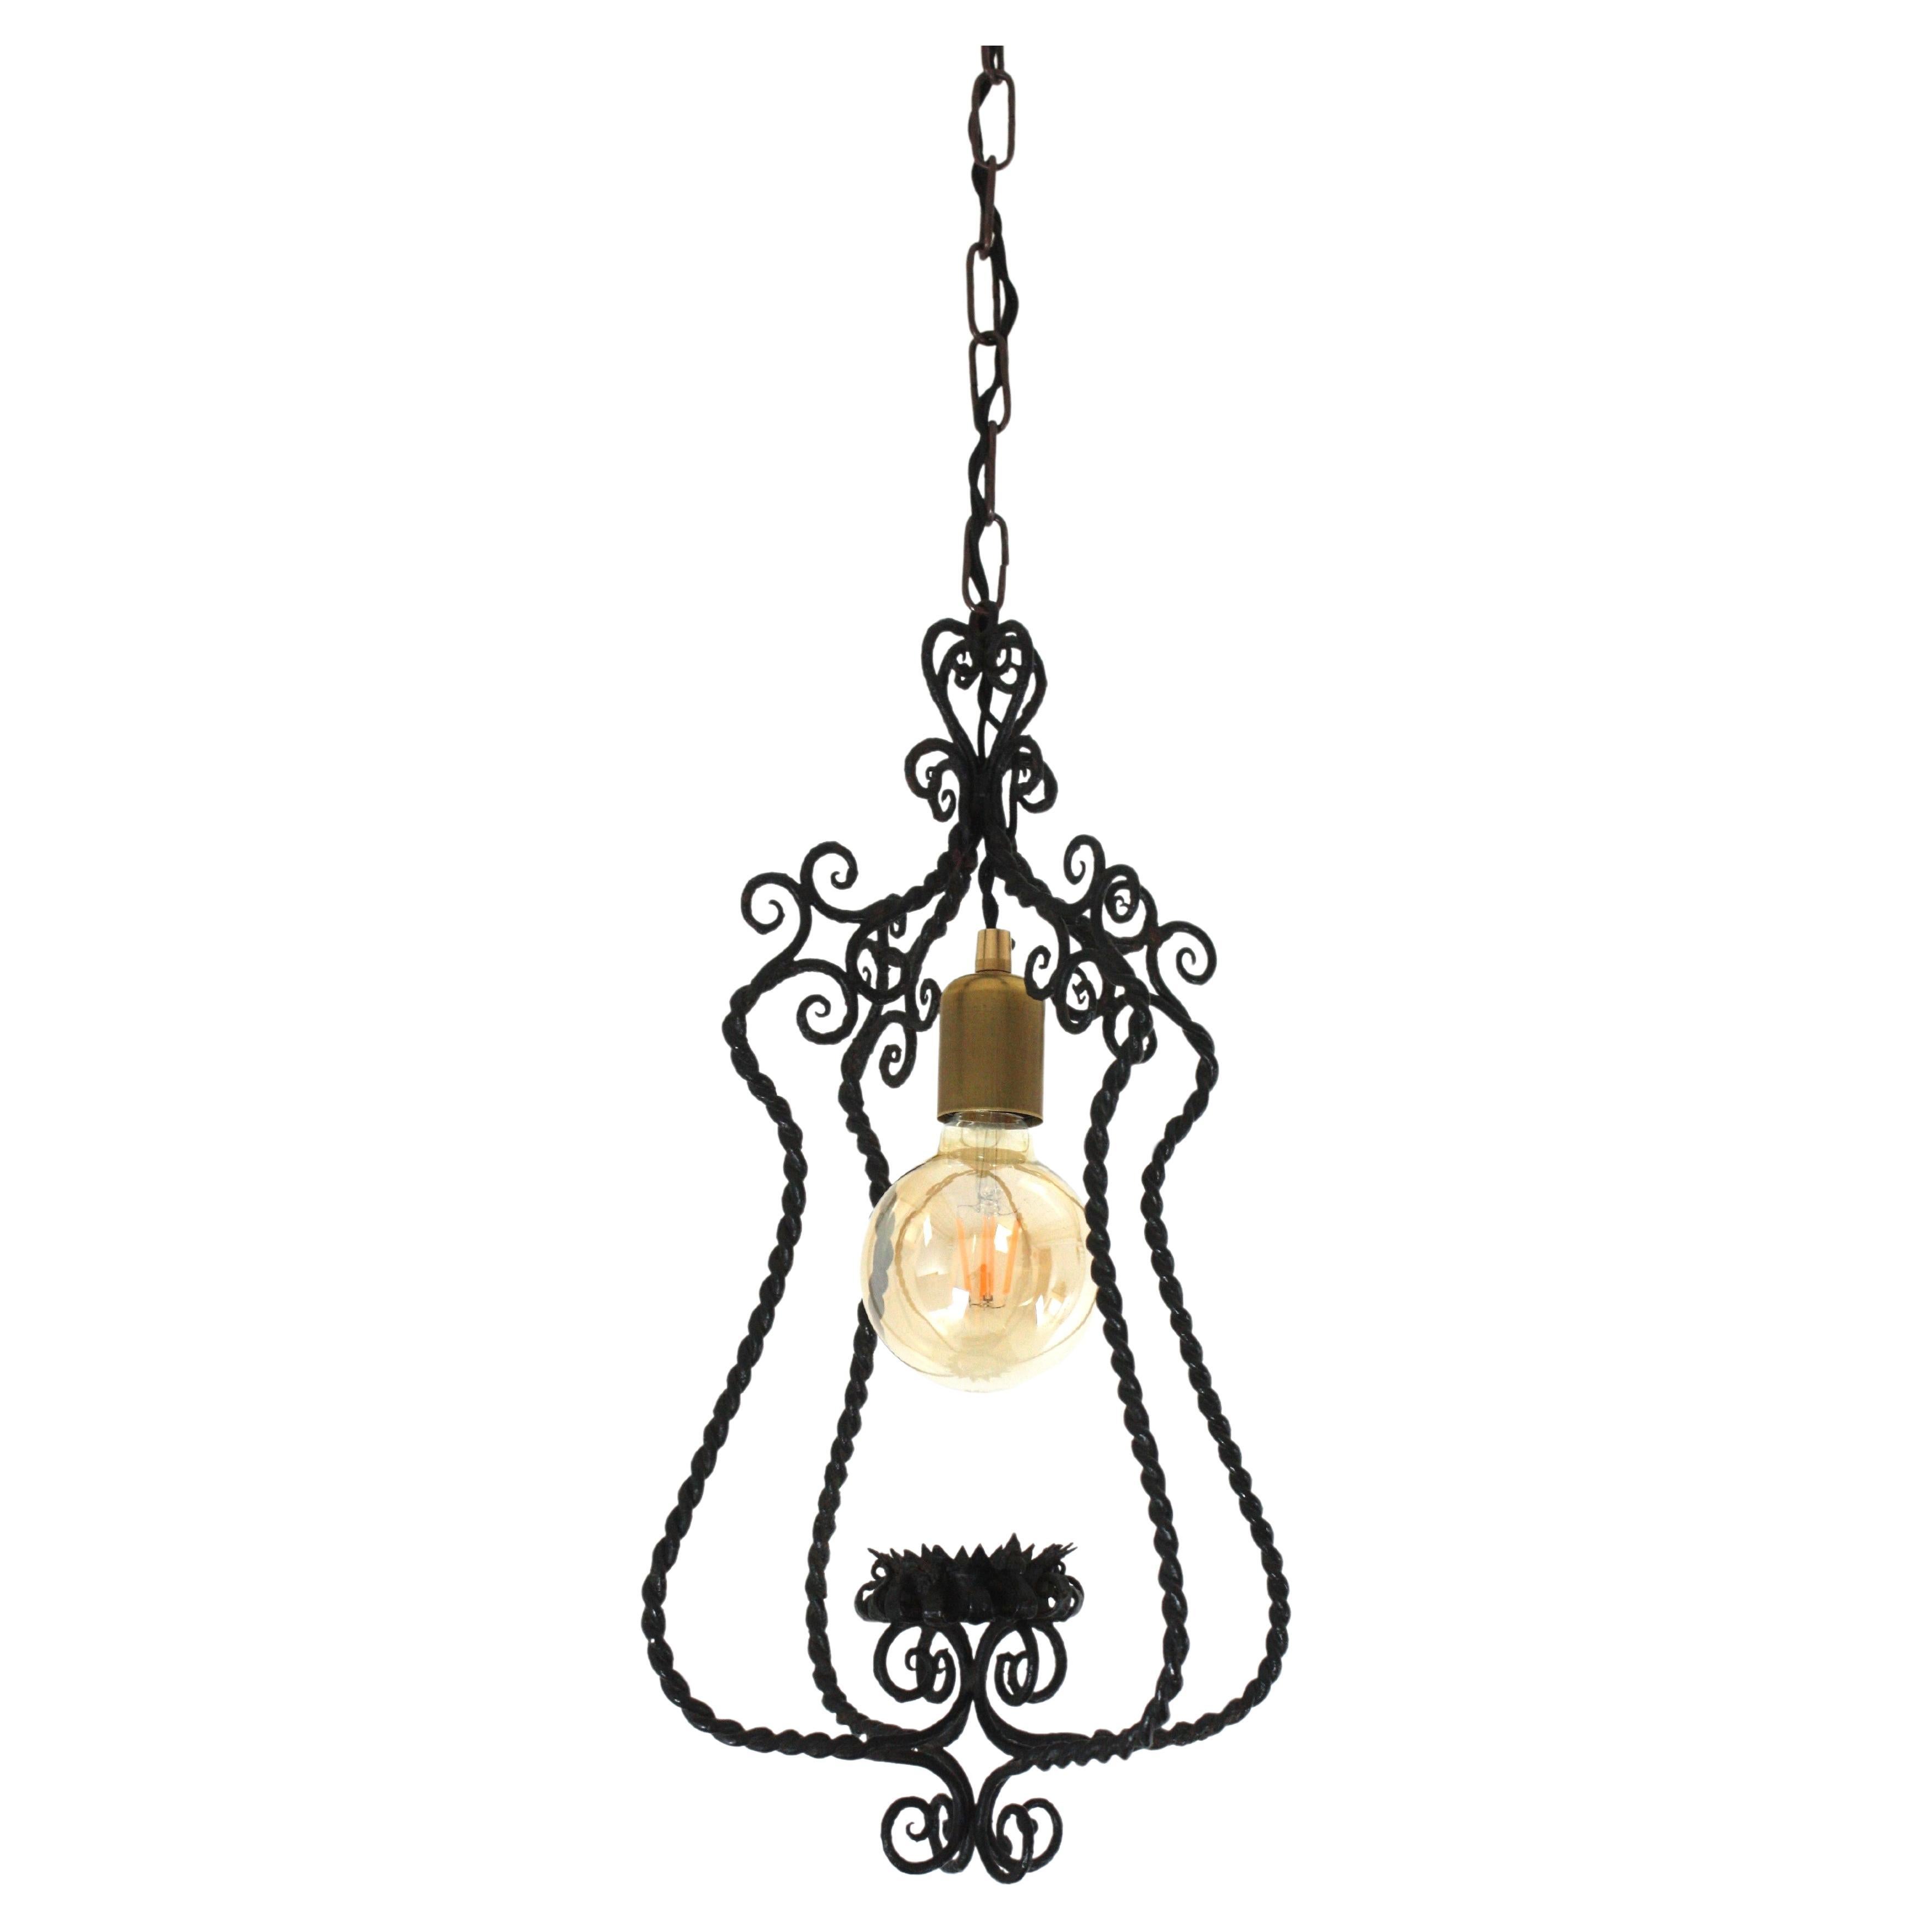 Spanish Lantern Pendant Lamp in Wrought Iron, Scroll Twisting Design, 1940s For Sale